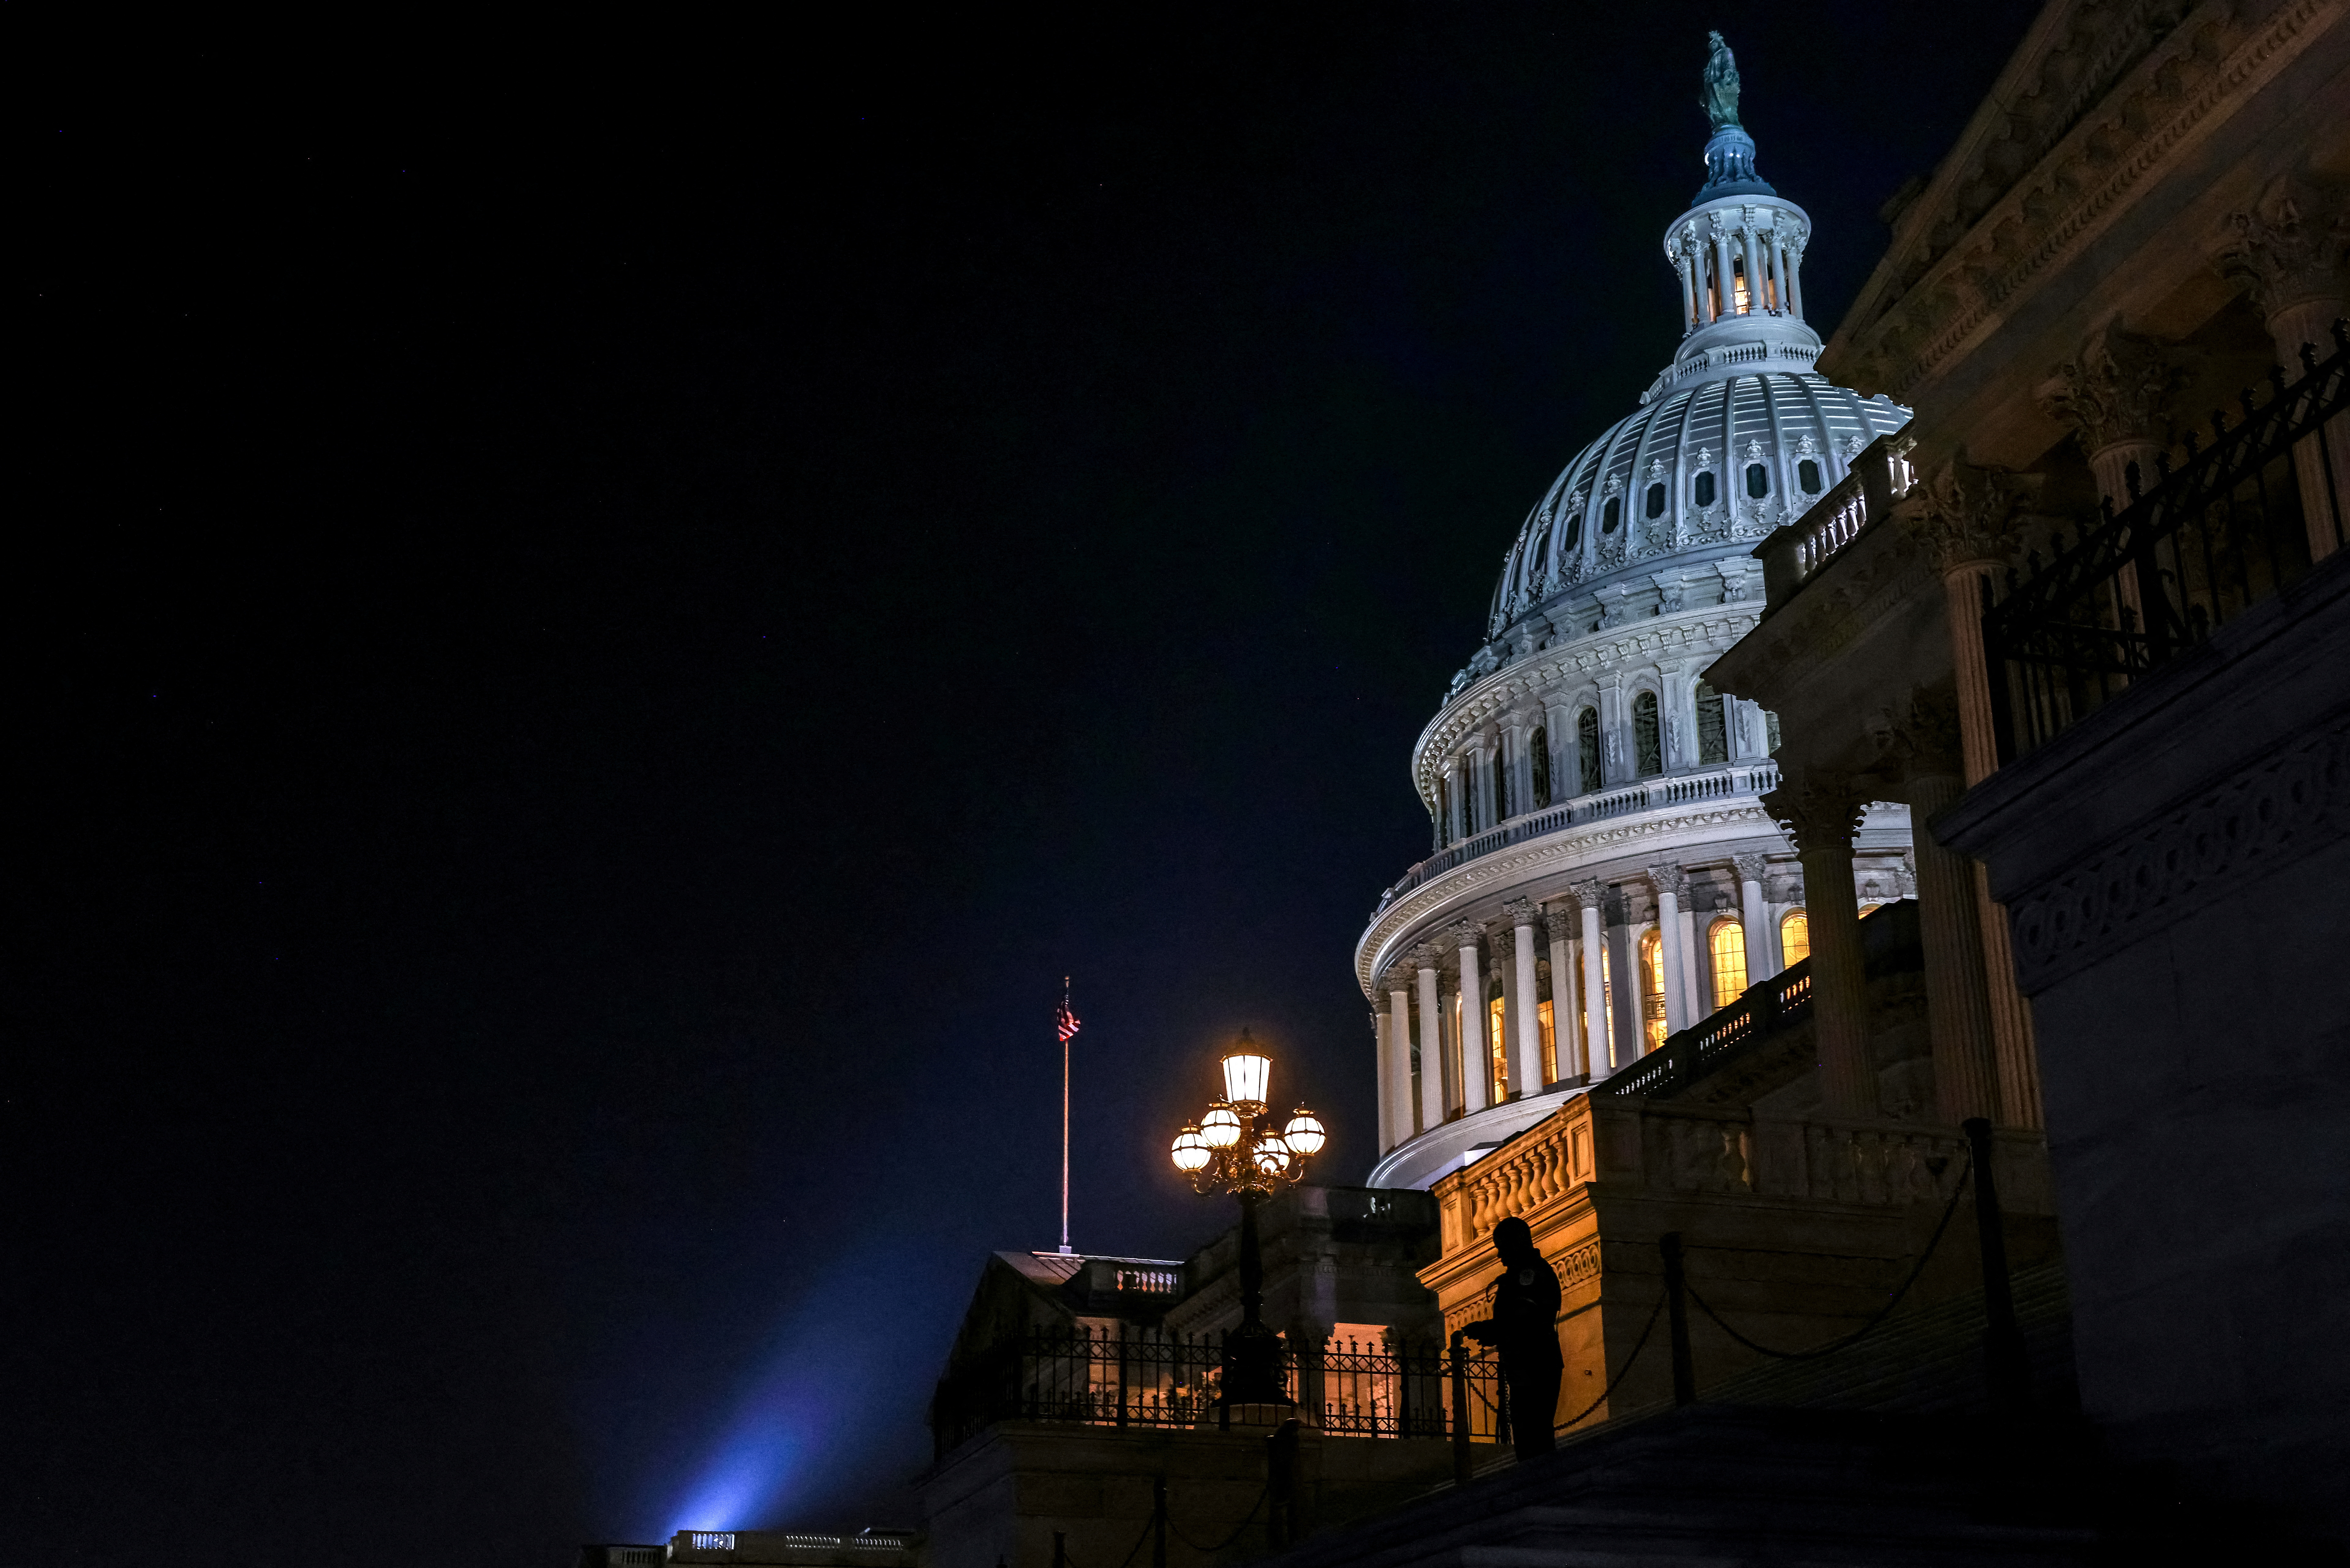 U.S. Senators vote on debt ceiling legislation to avoid a historic default at the U.S. Capitol in Washington